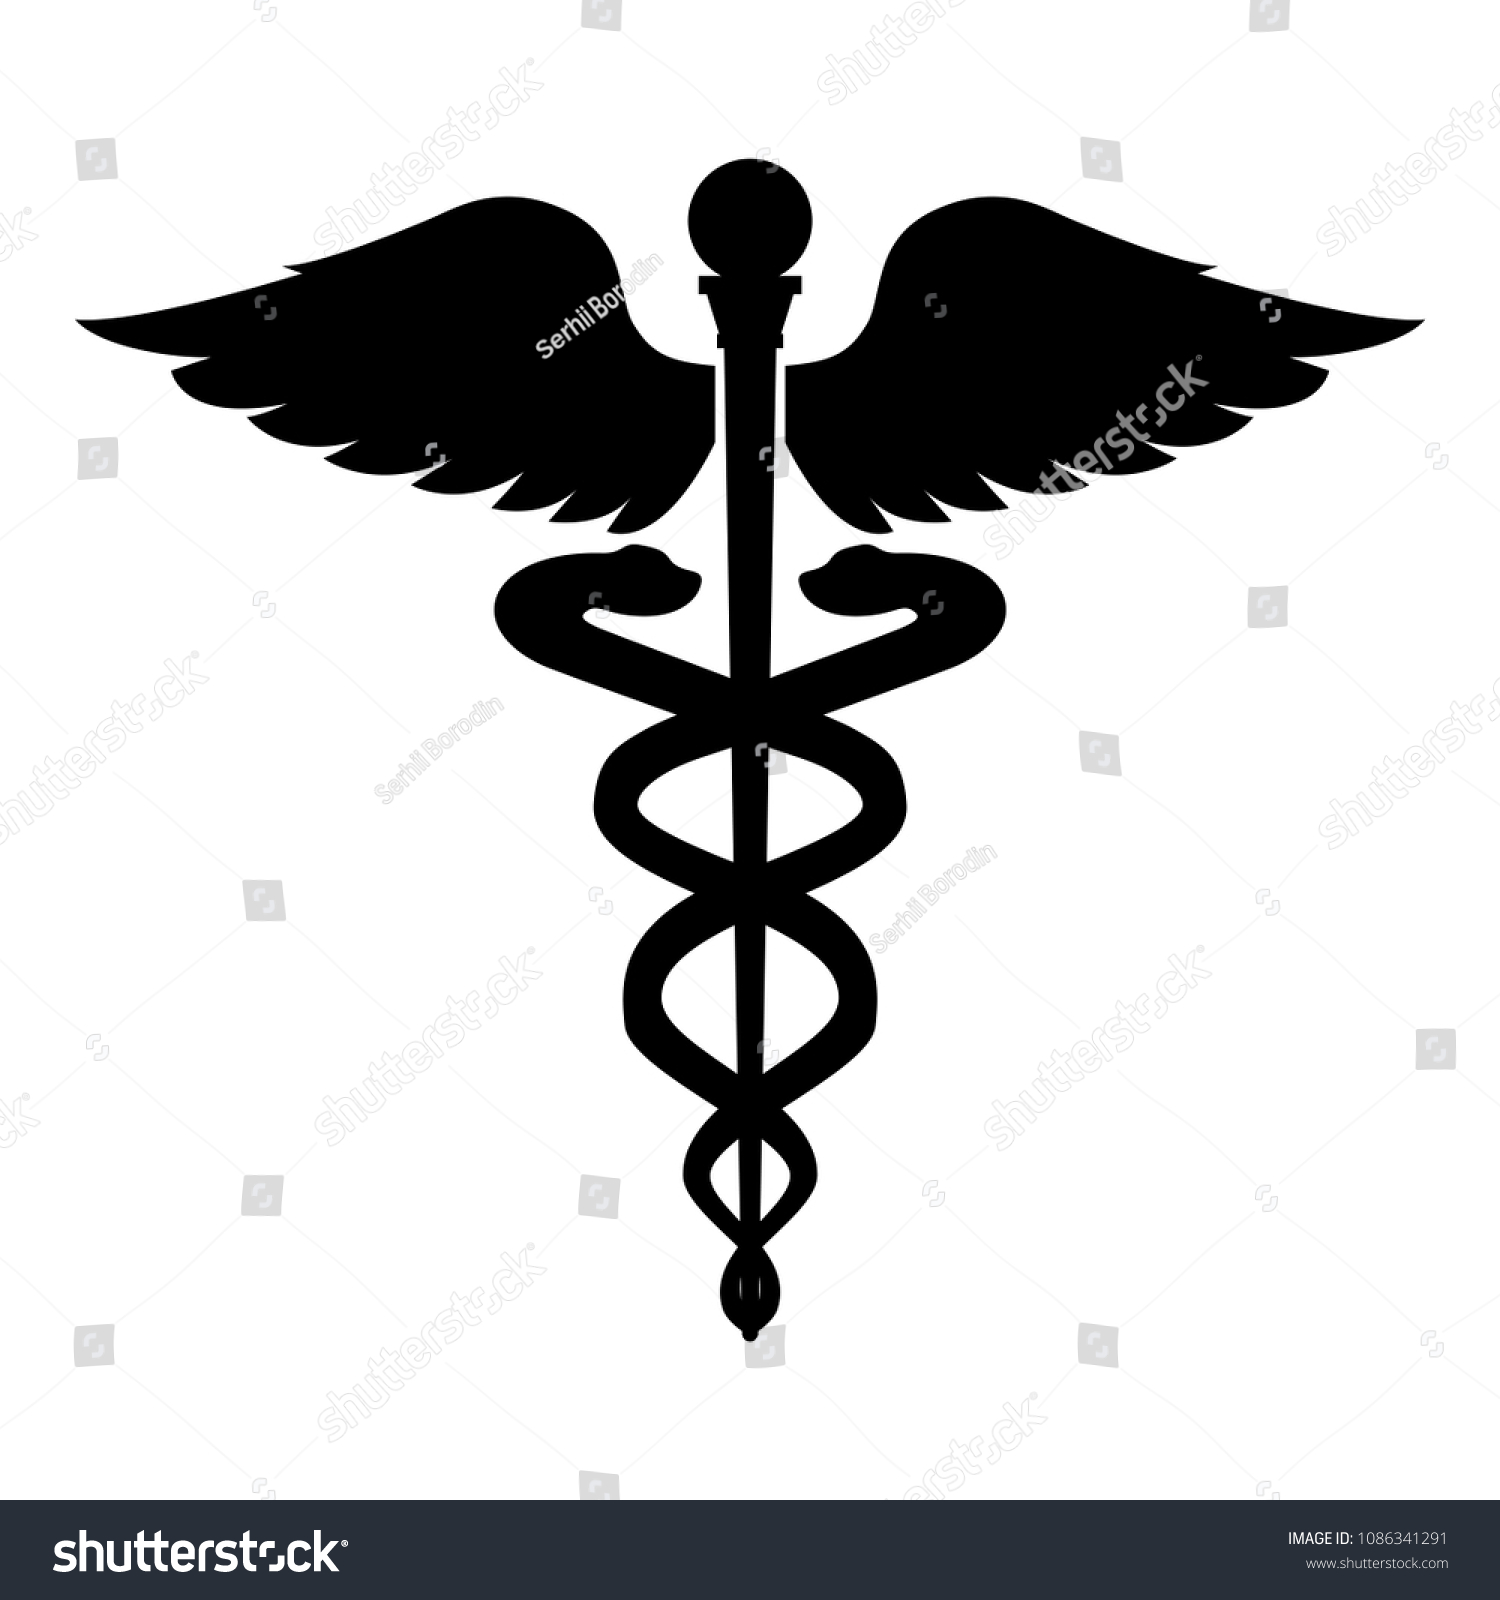 Caduceus health symbol Asclepius's Wand icon black color #1086341291